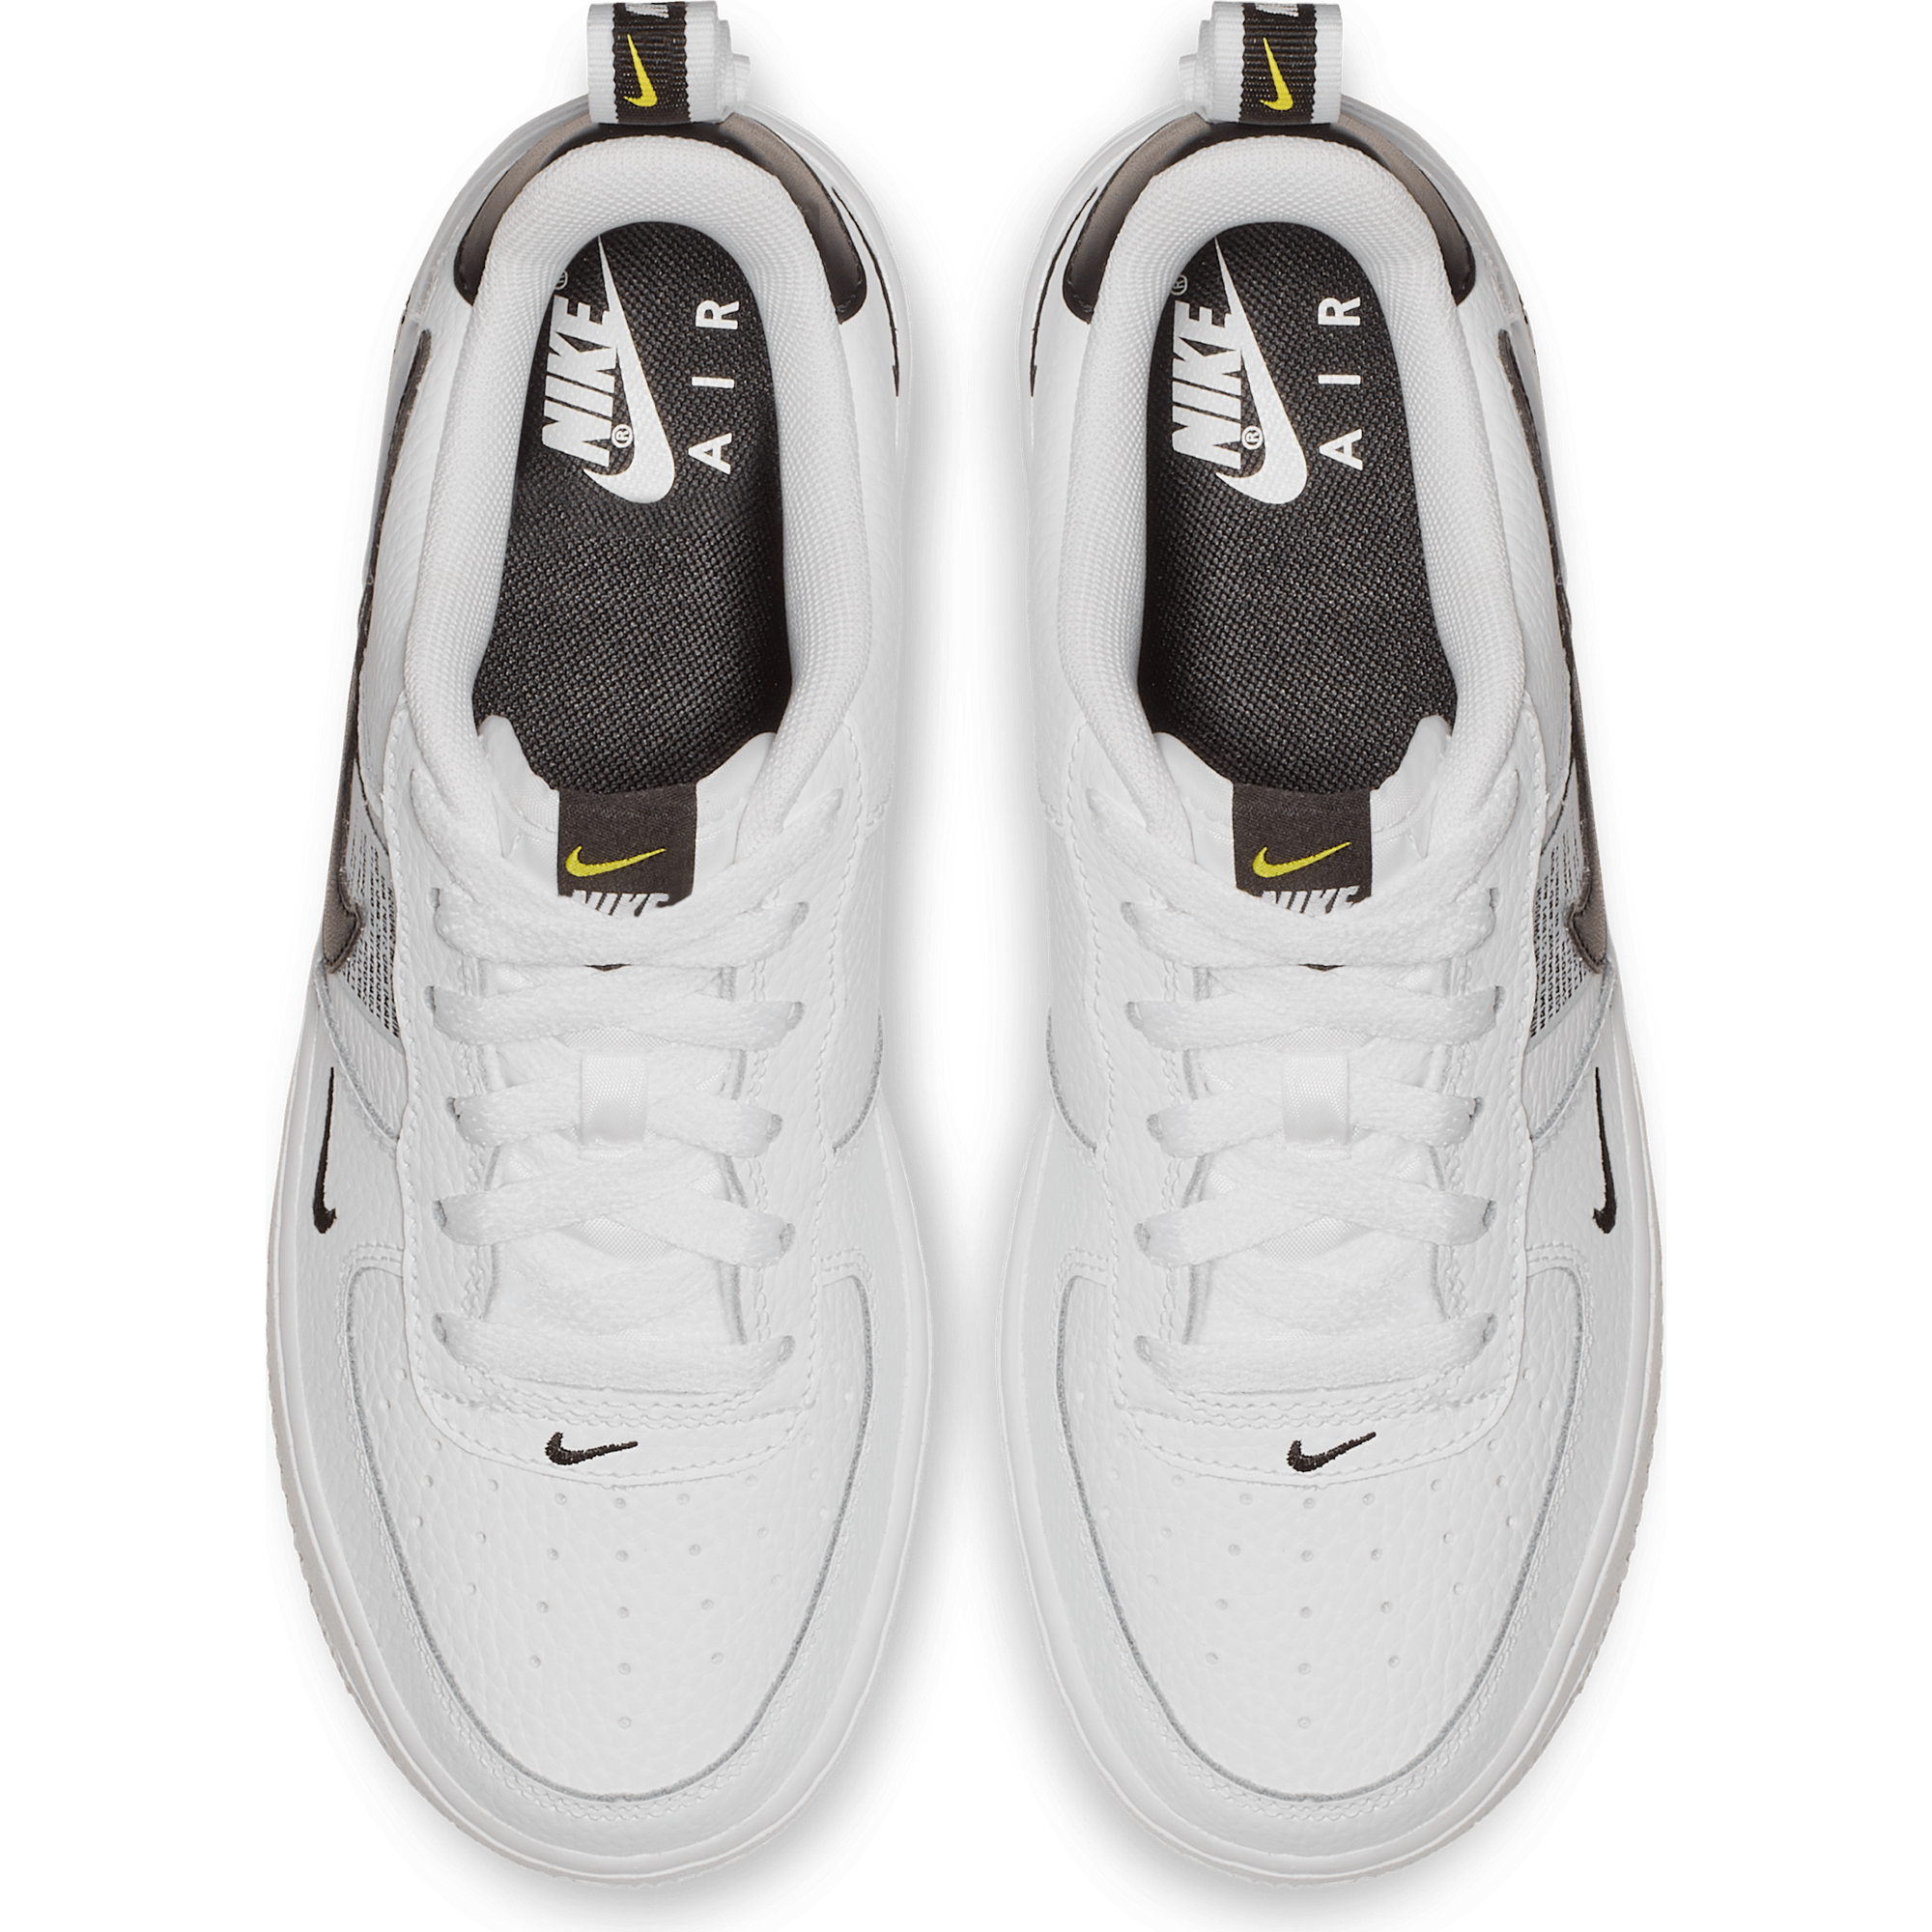 Nike Air Force 1 LV8 Utility White Black, Where To Buy